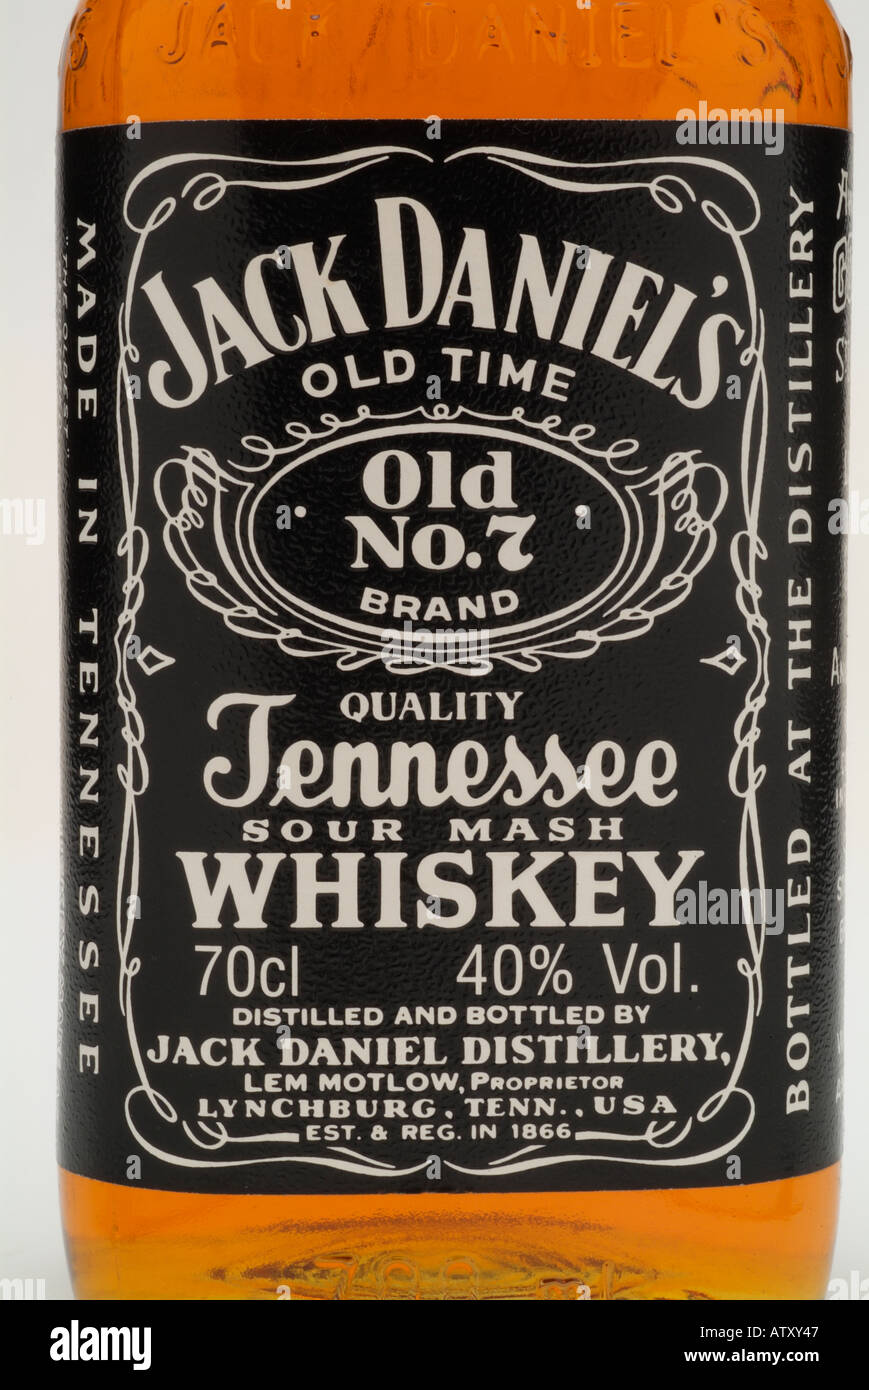 Jack Daniels alte Zeit Nummer keine 7 Tennessee Sour mash Daniel Brennerei  Lem Motlow Lynchburg tenn Usa Amerika sippin Stockfotografie - Alamy